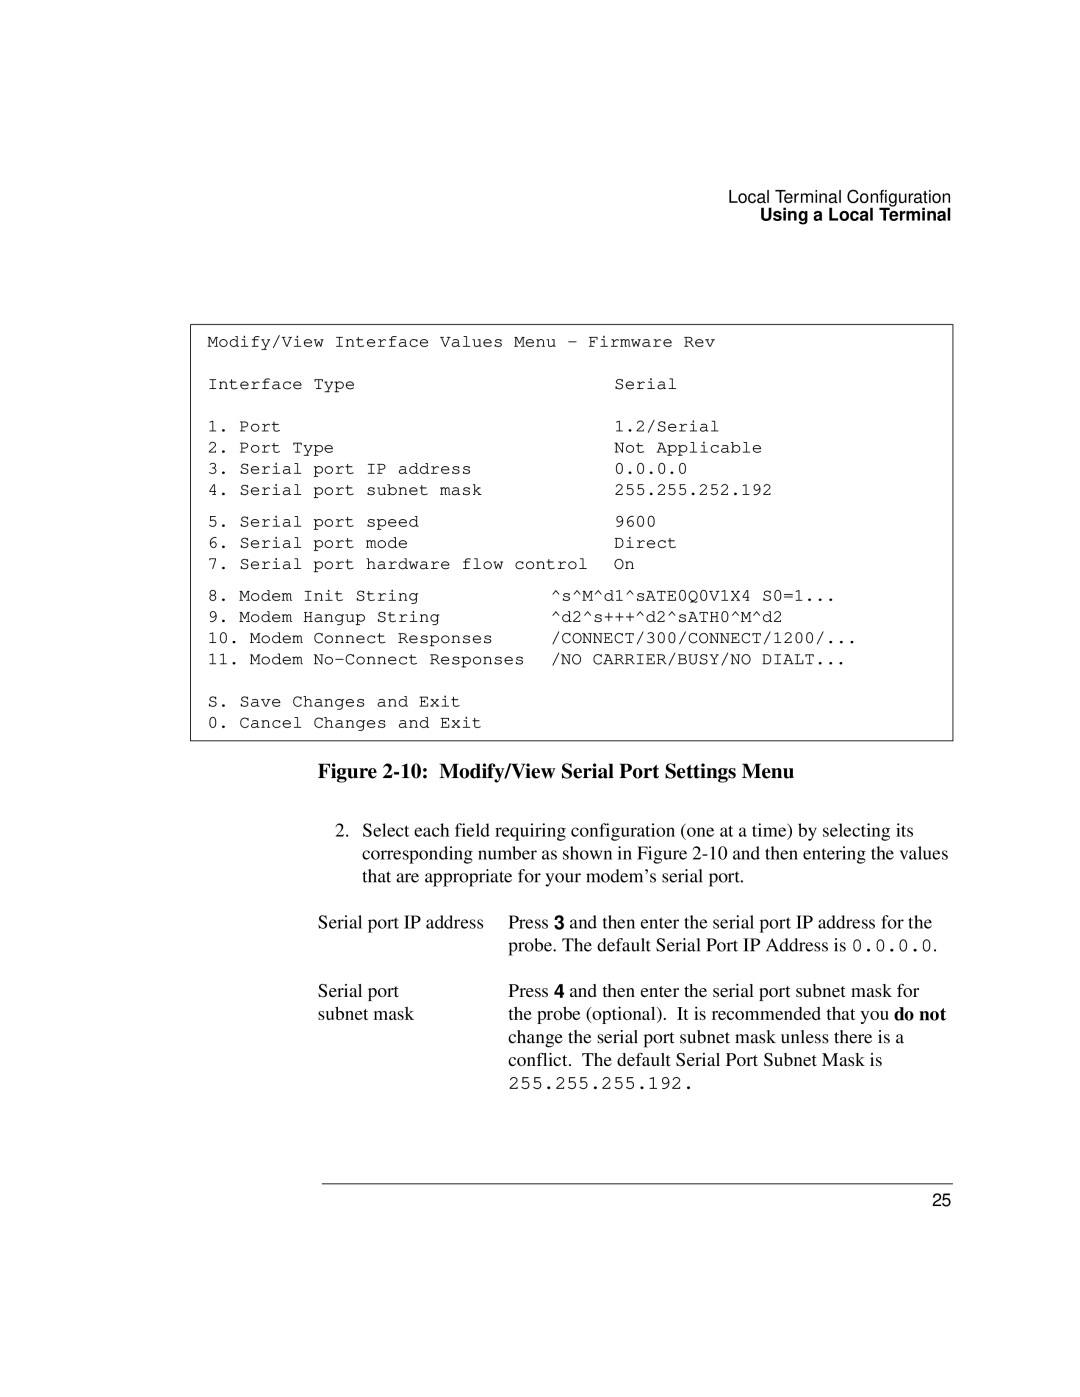 IBM 4986B LanProbe manual 10 Modify/View Serial Port Settings Menu 